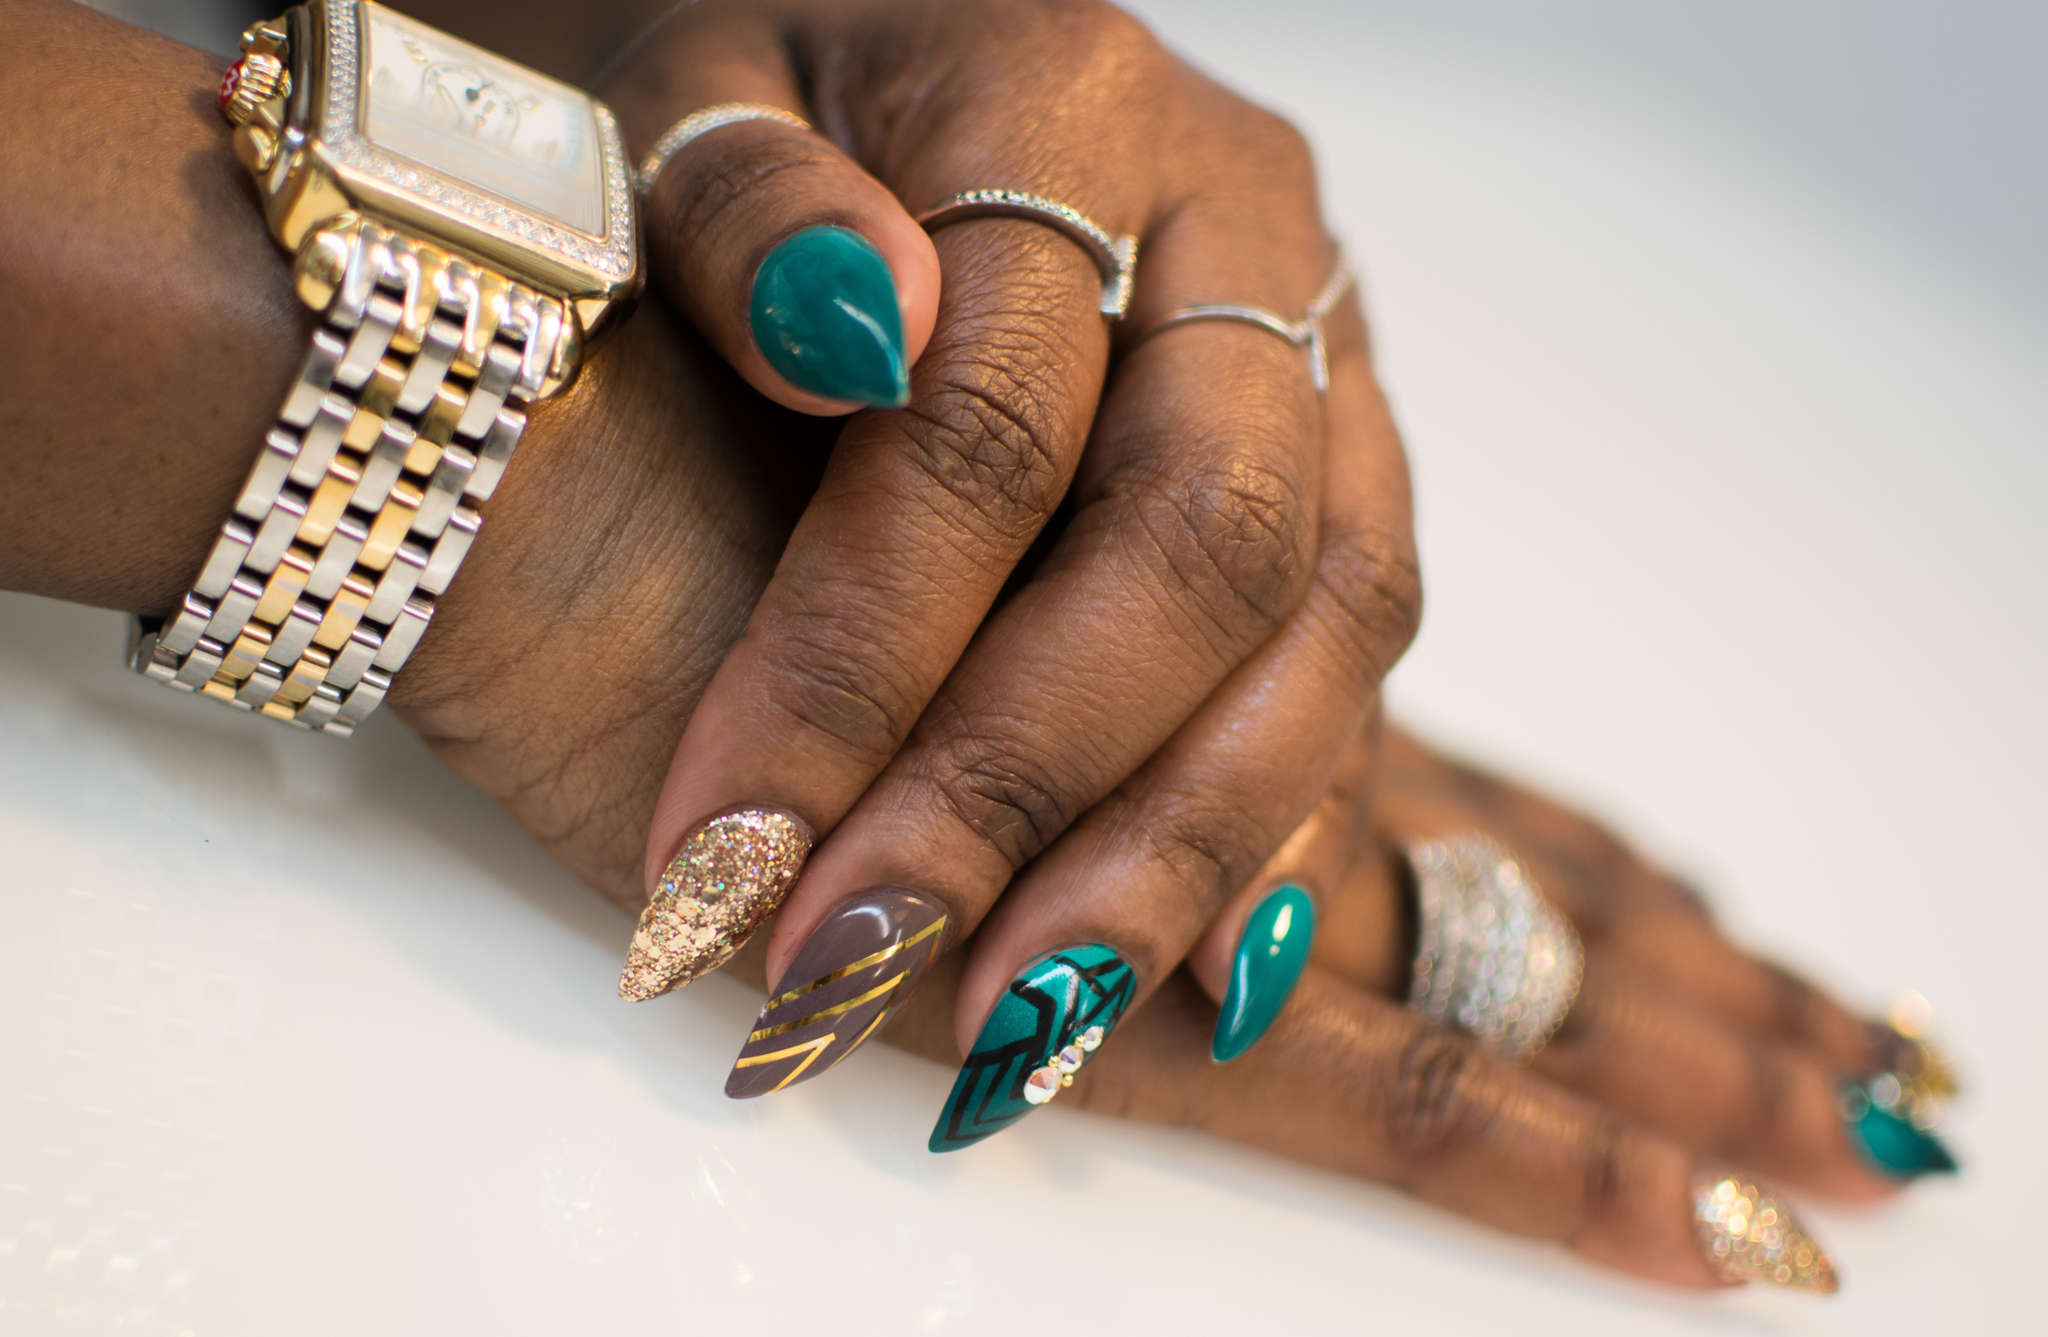 lady gaga pointy nails